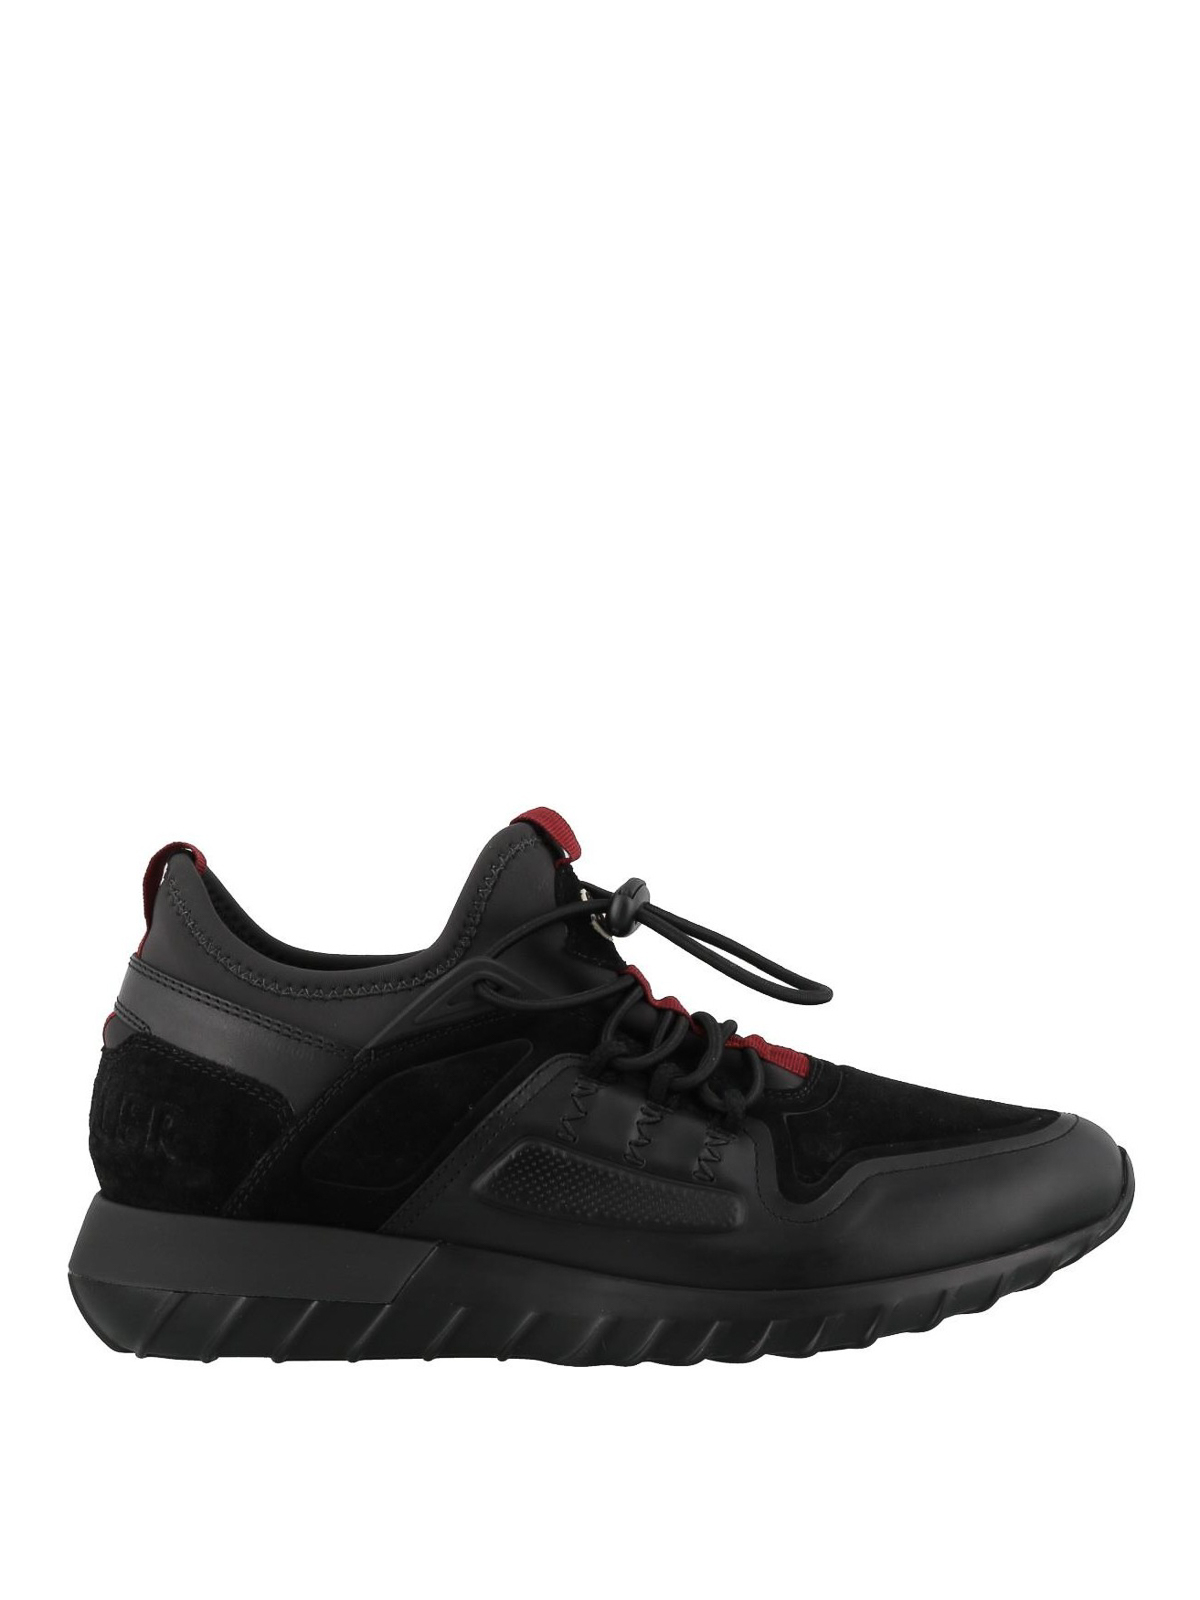 Trainers Moncler - Garry black sneakers - 1025300019Q3999 | iKRIX.com